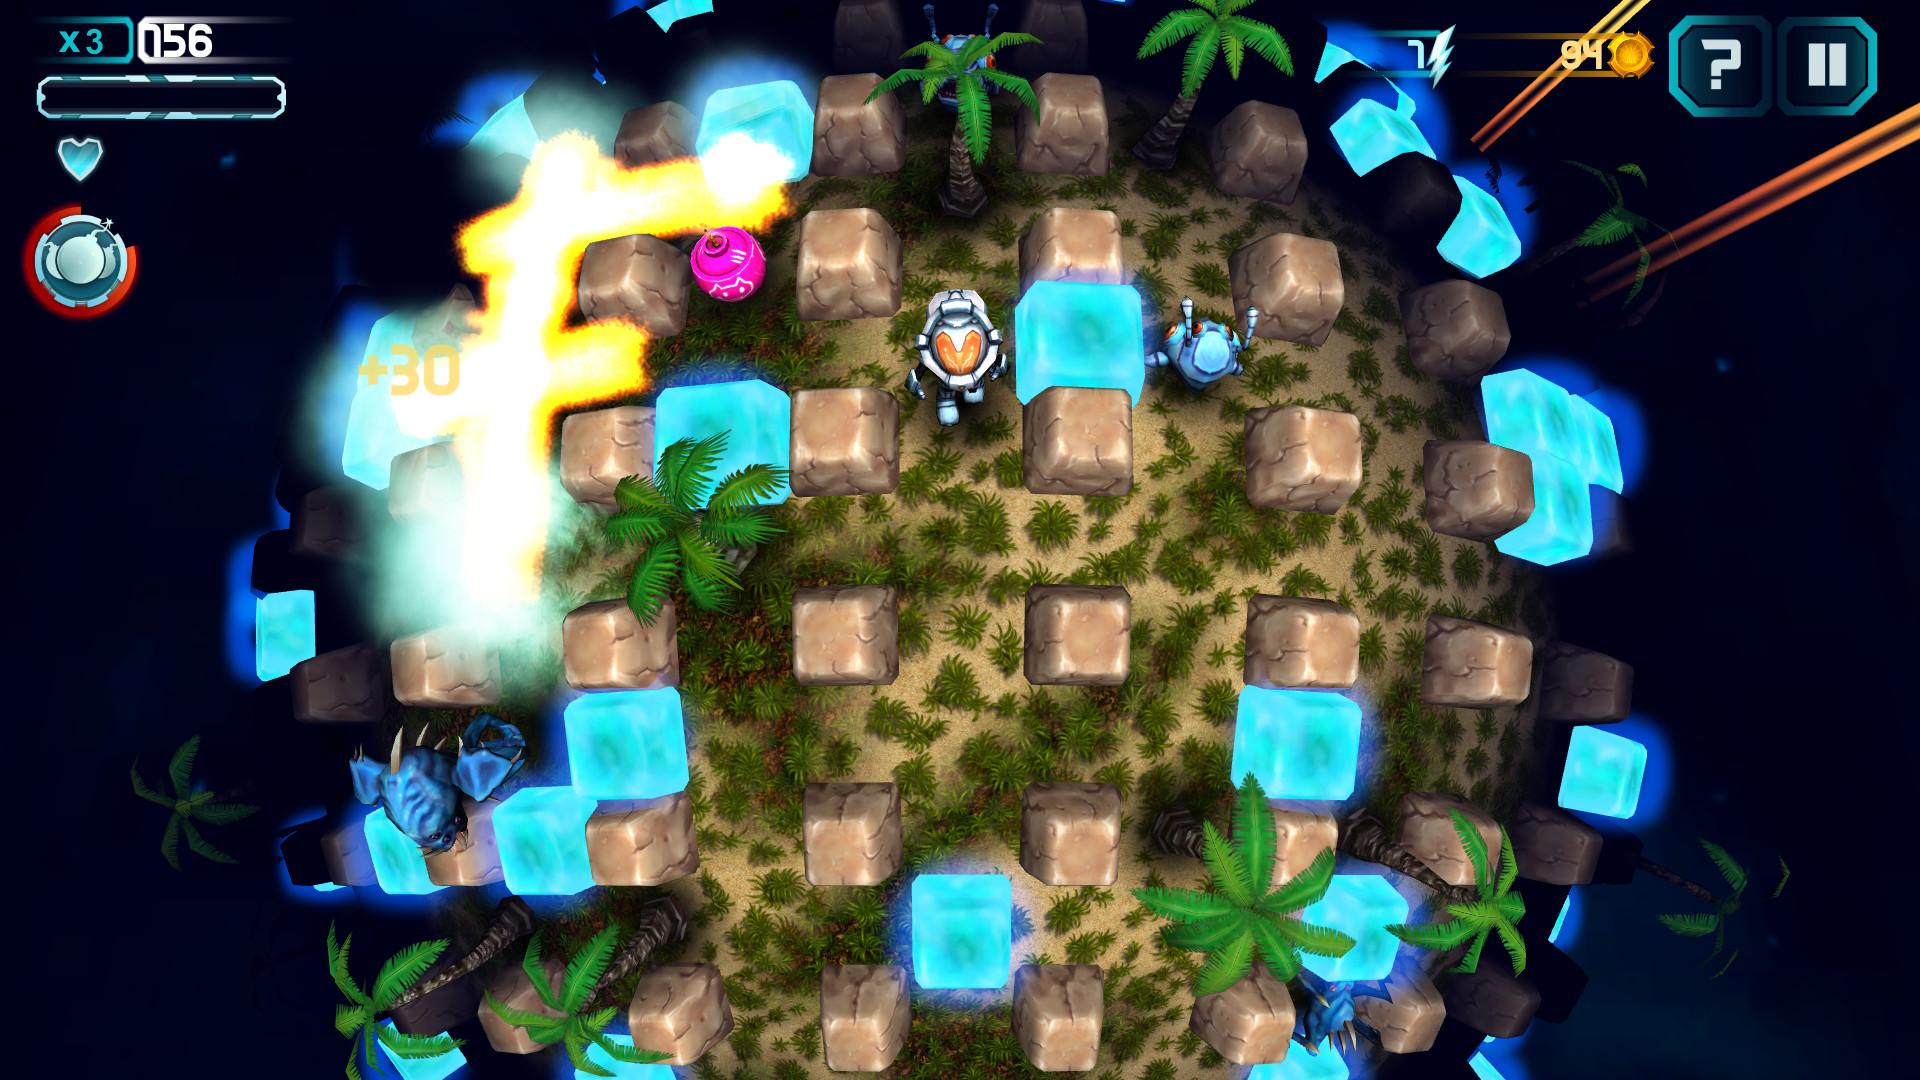 Screenshot №5 from game BomberZone